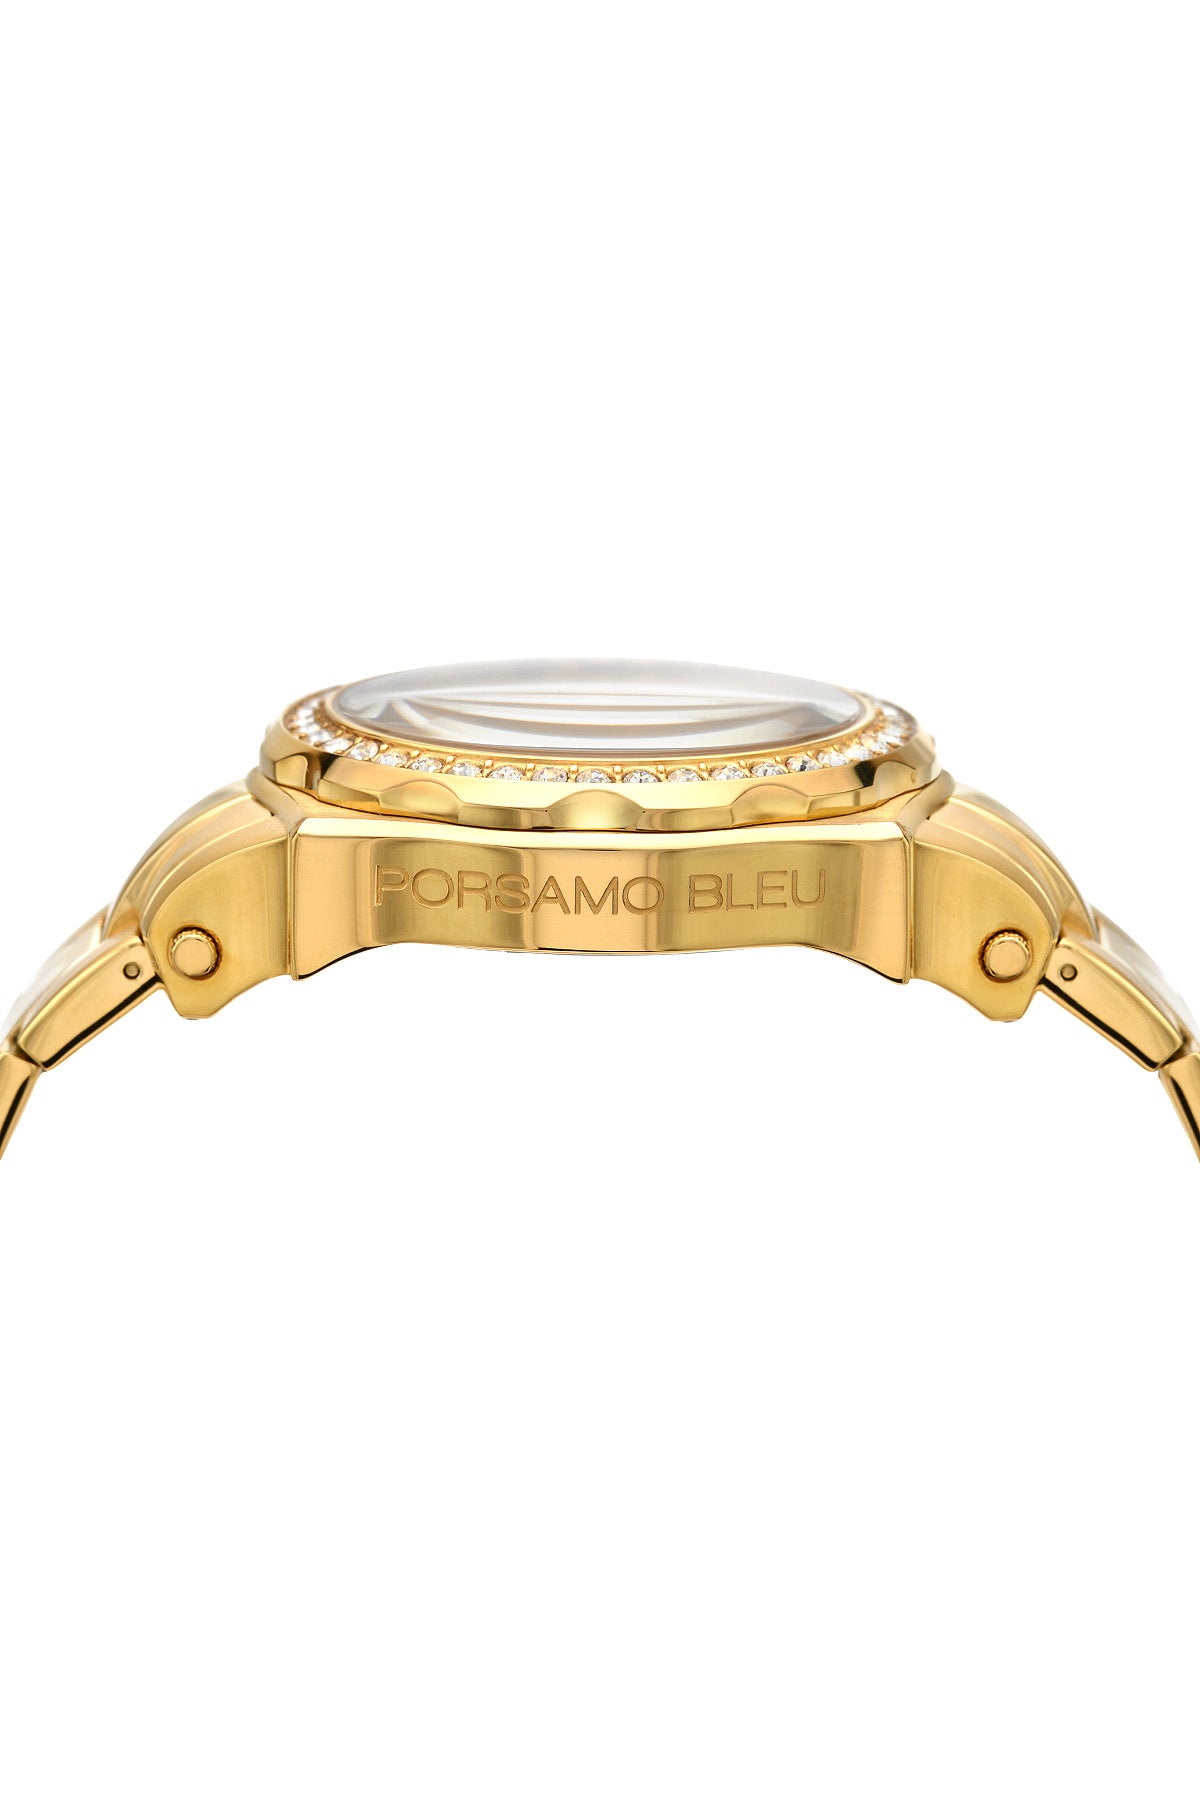 Porsamo Bleu Milan Crystal luxury women's stainless steel watch, Swarovski® crystals, gold, white, 037BMCS